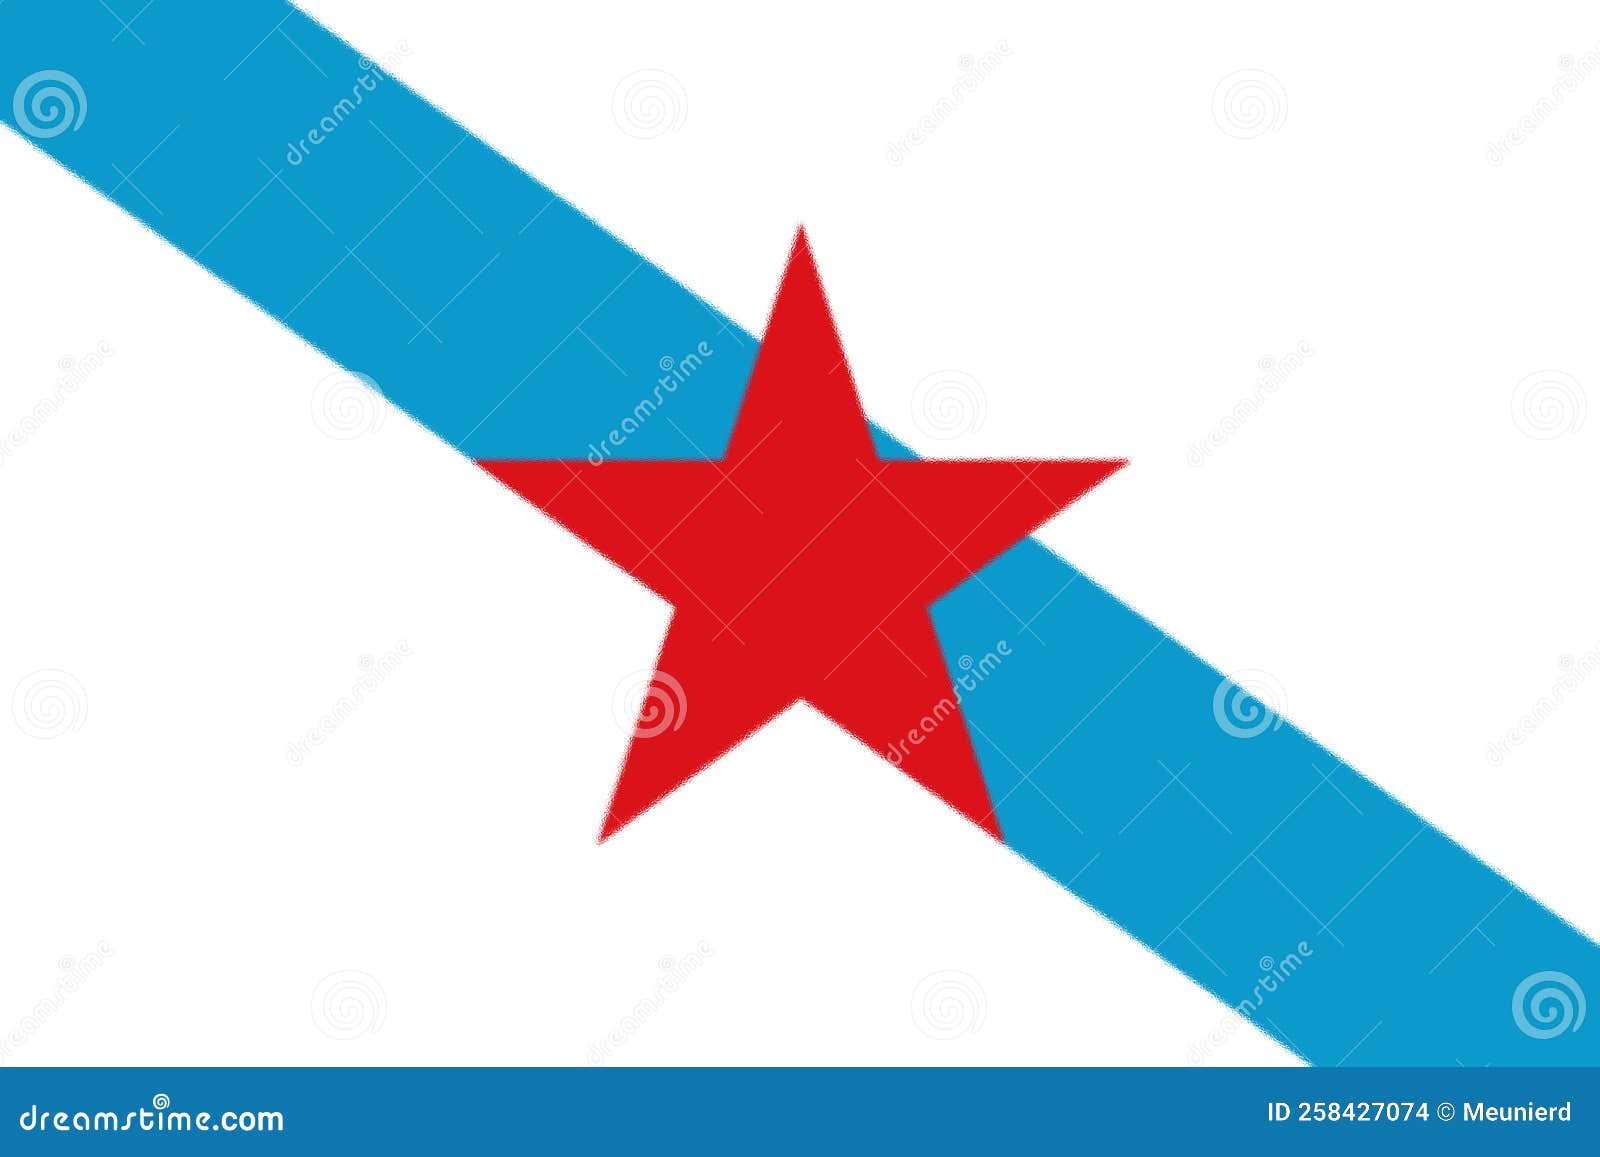 glossy glass flag of galician independentism spain, called estreleira